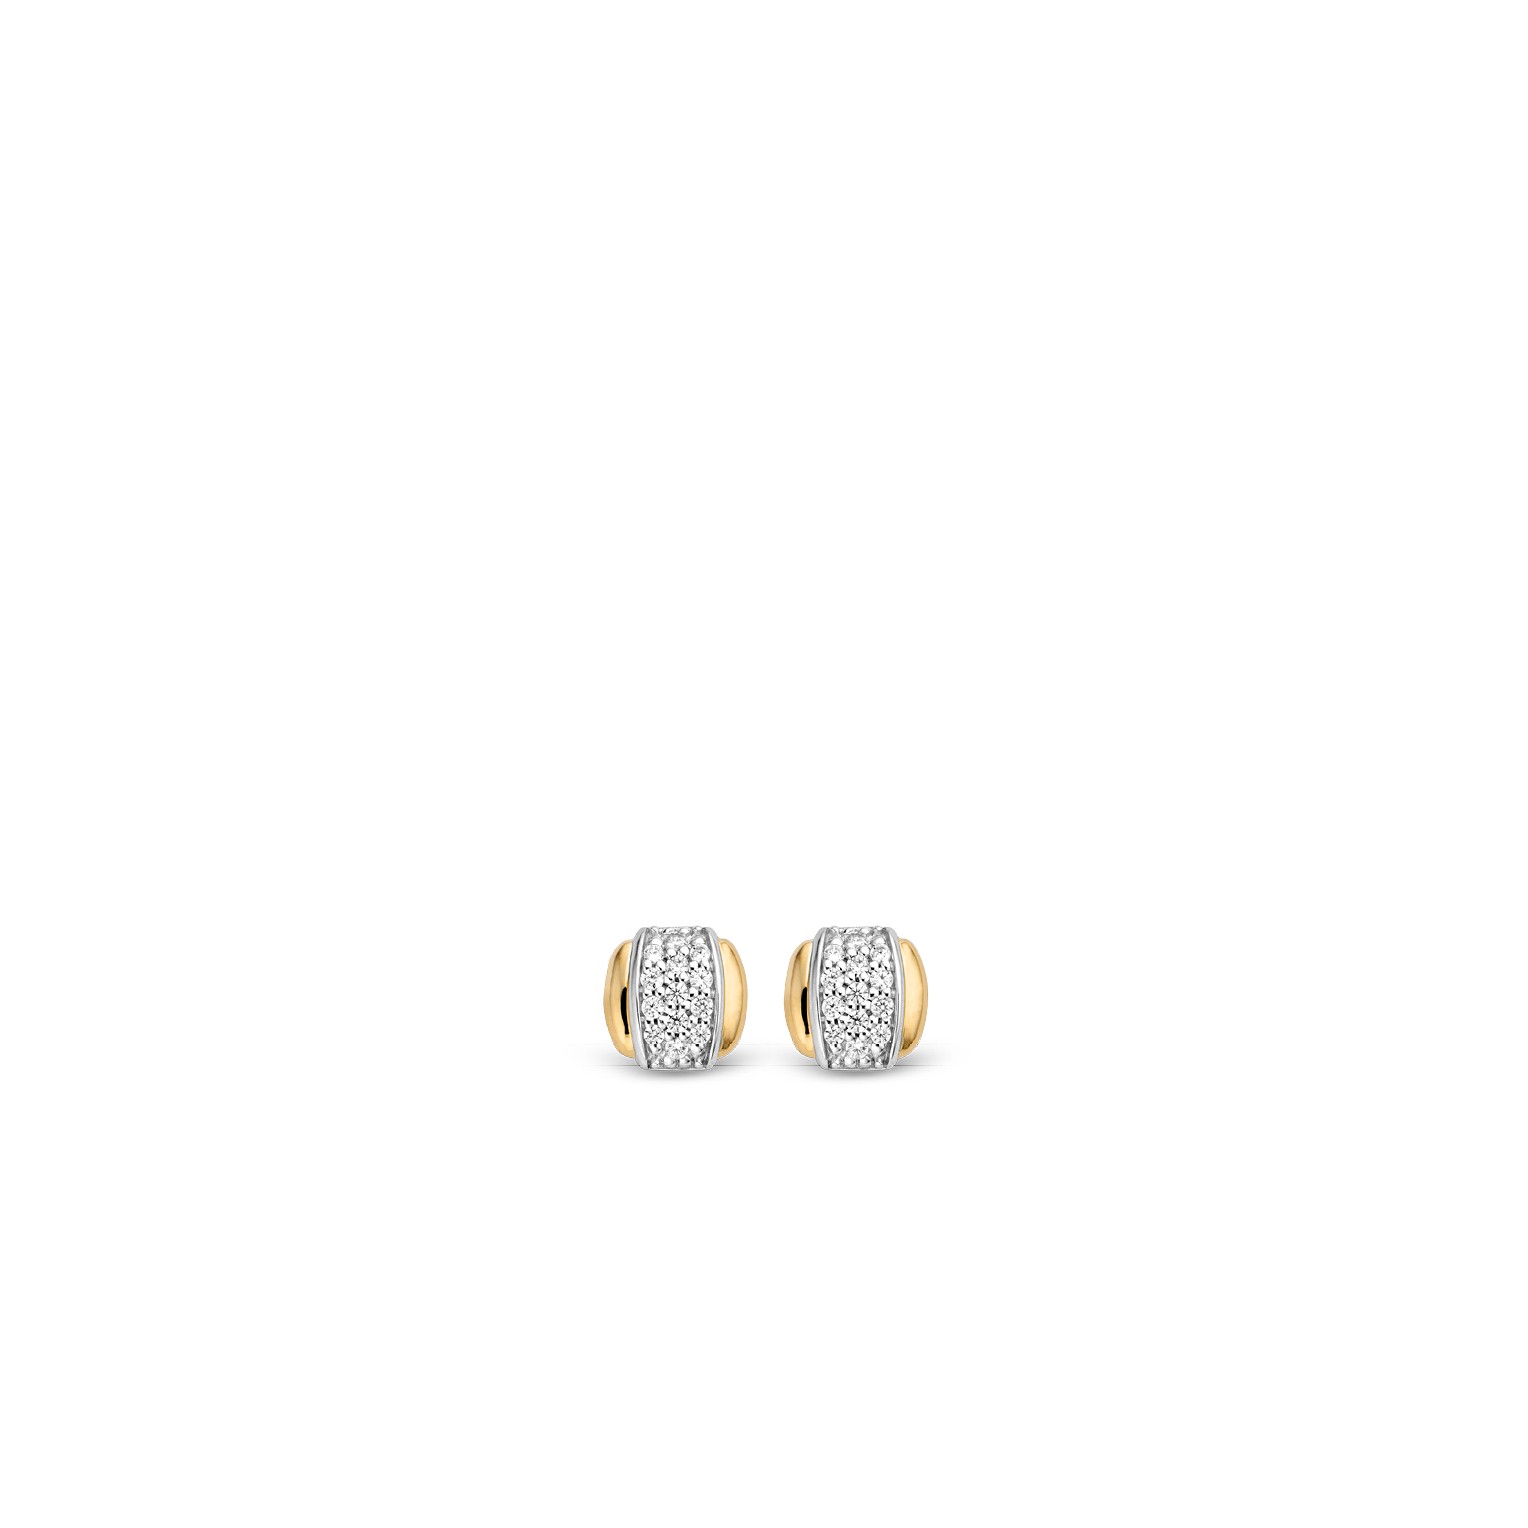 TI SENTO - Milano Earrings 7799ZY Image 2 Trinity Jewelers  Pittsburgh, PA